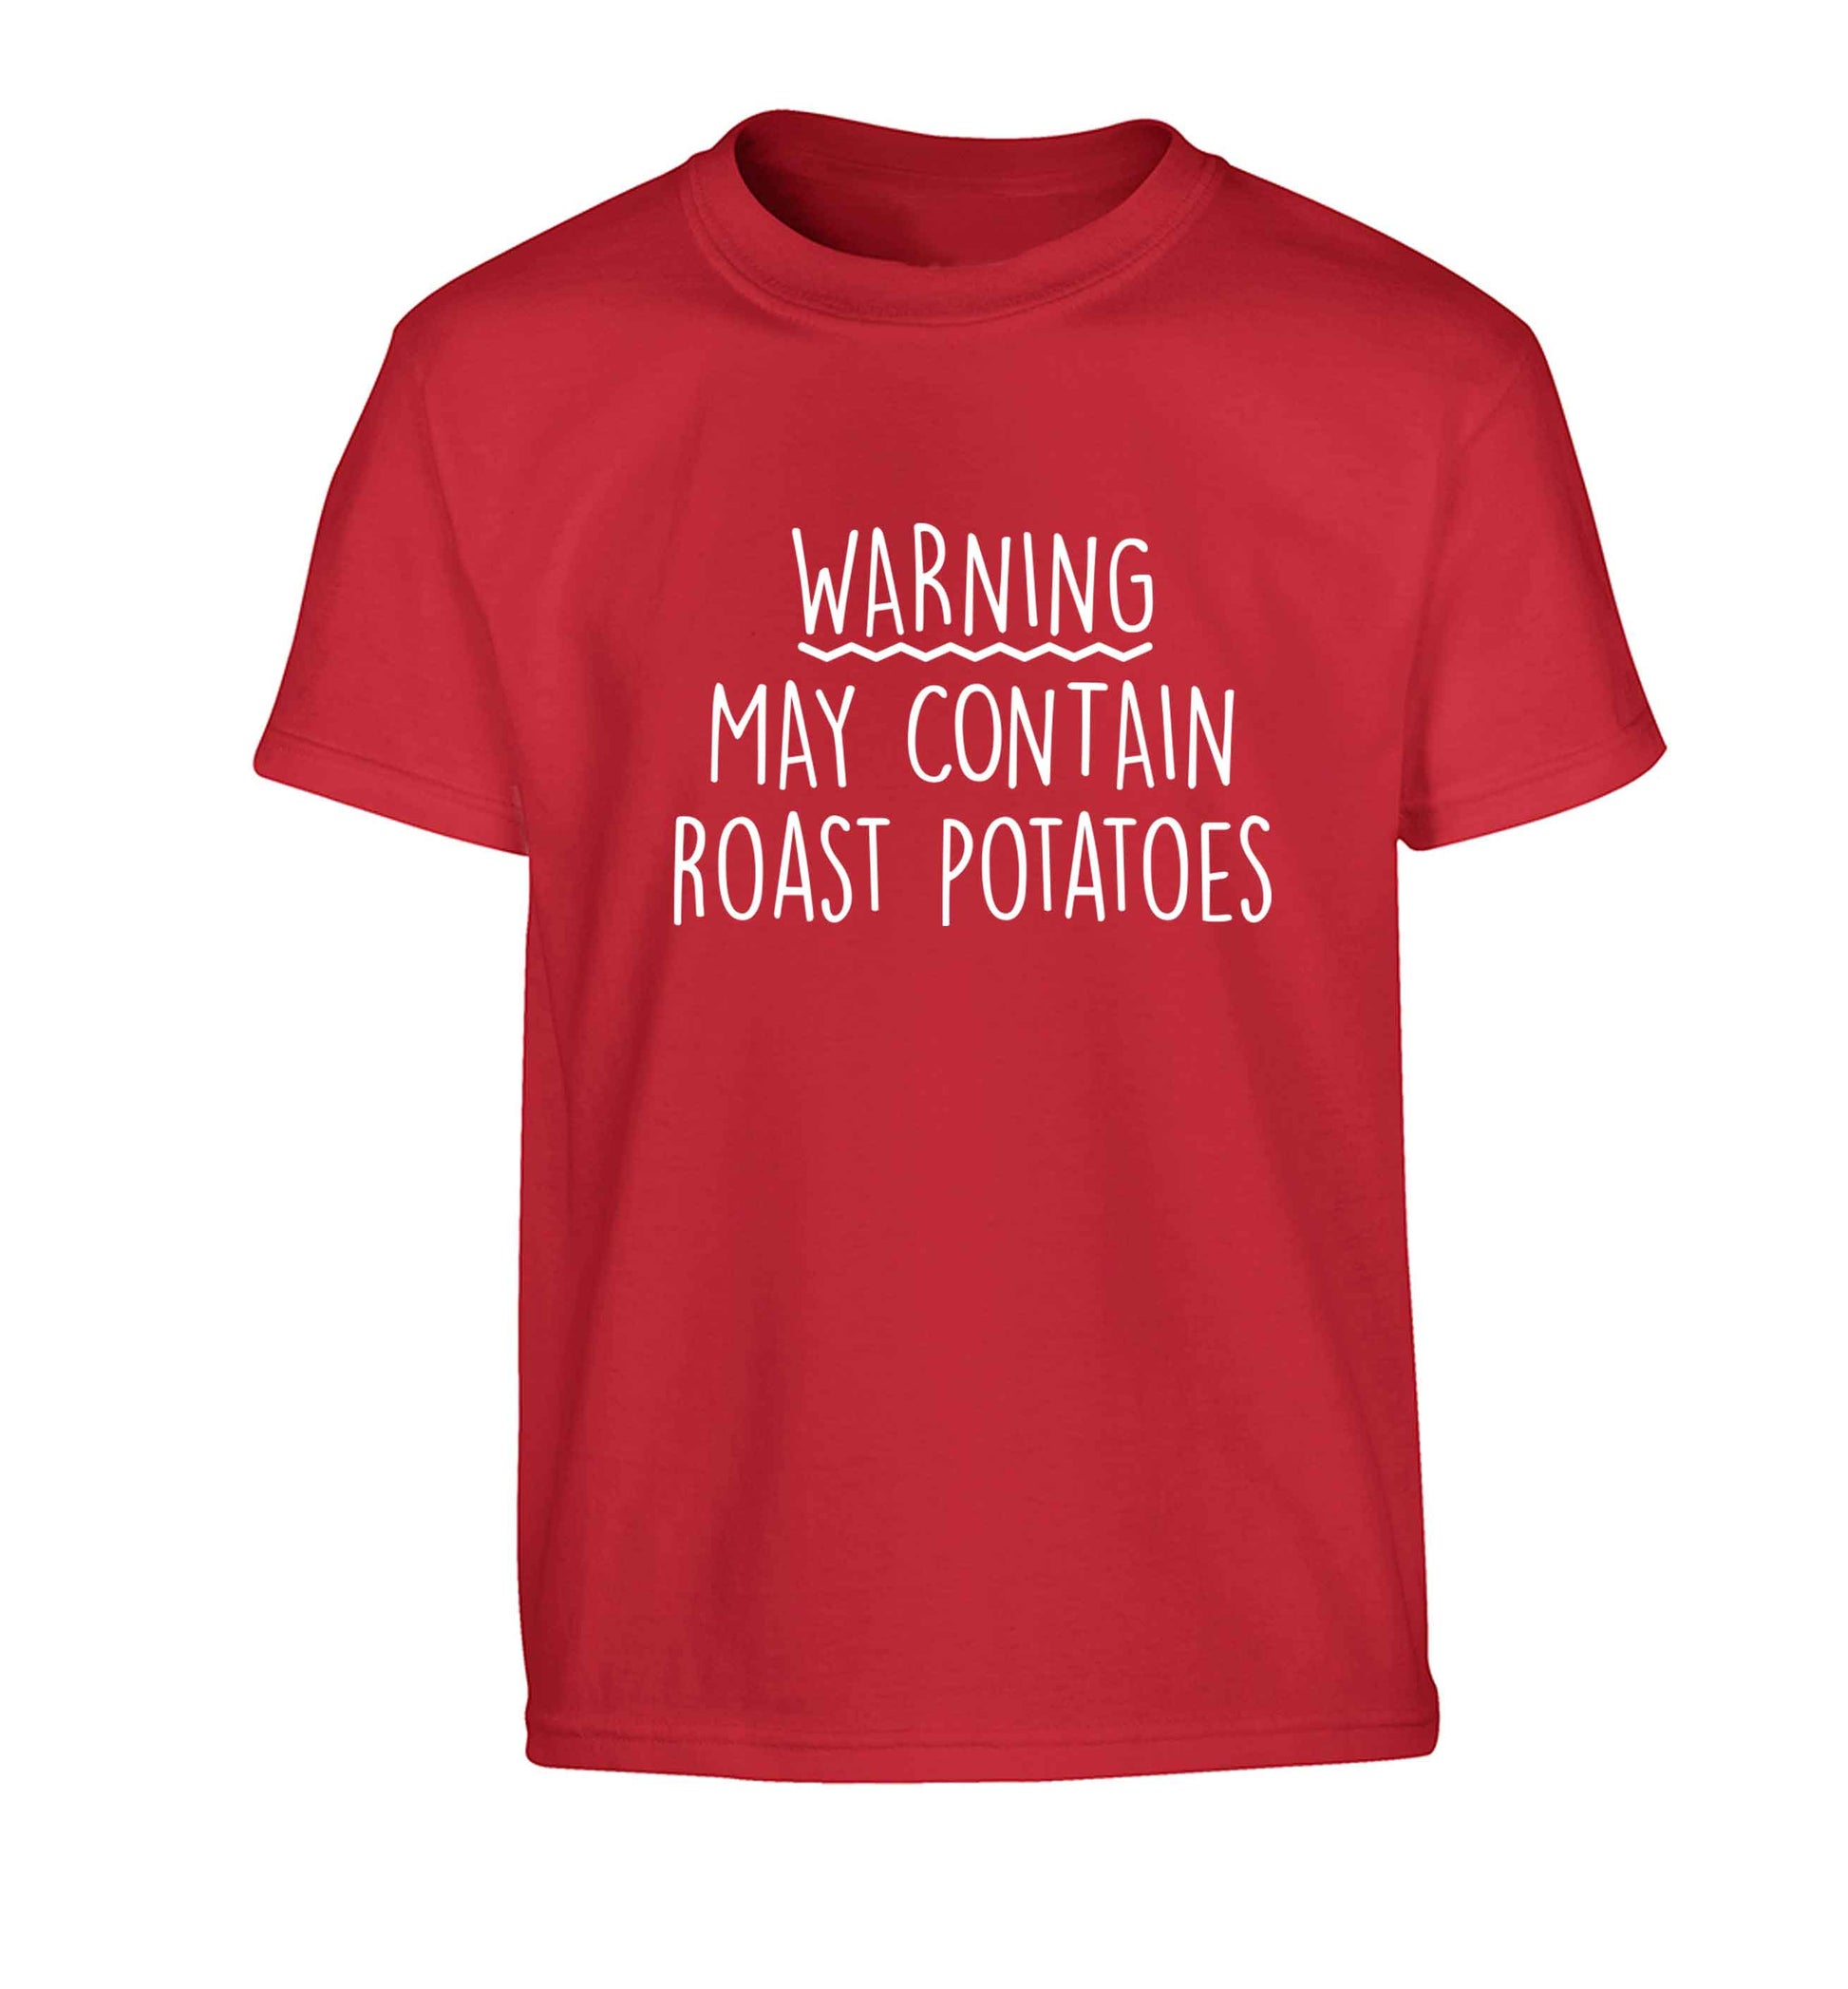 Warning may containg roast potatoes Children's red Tshirt 12-13 Years